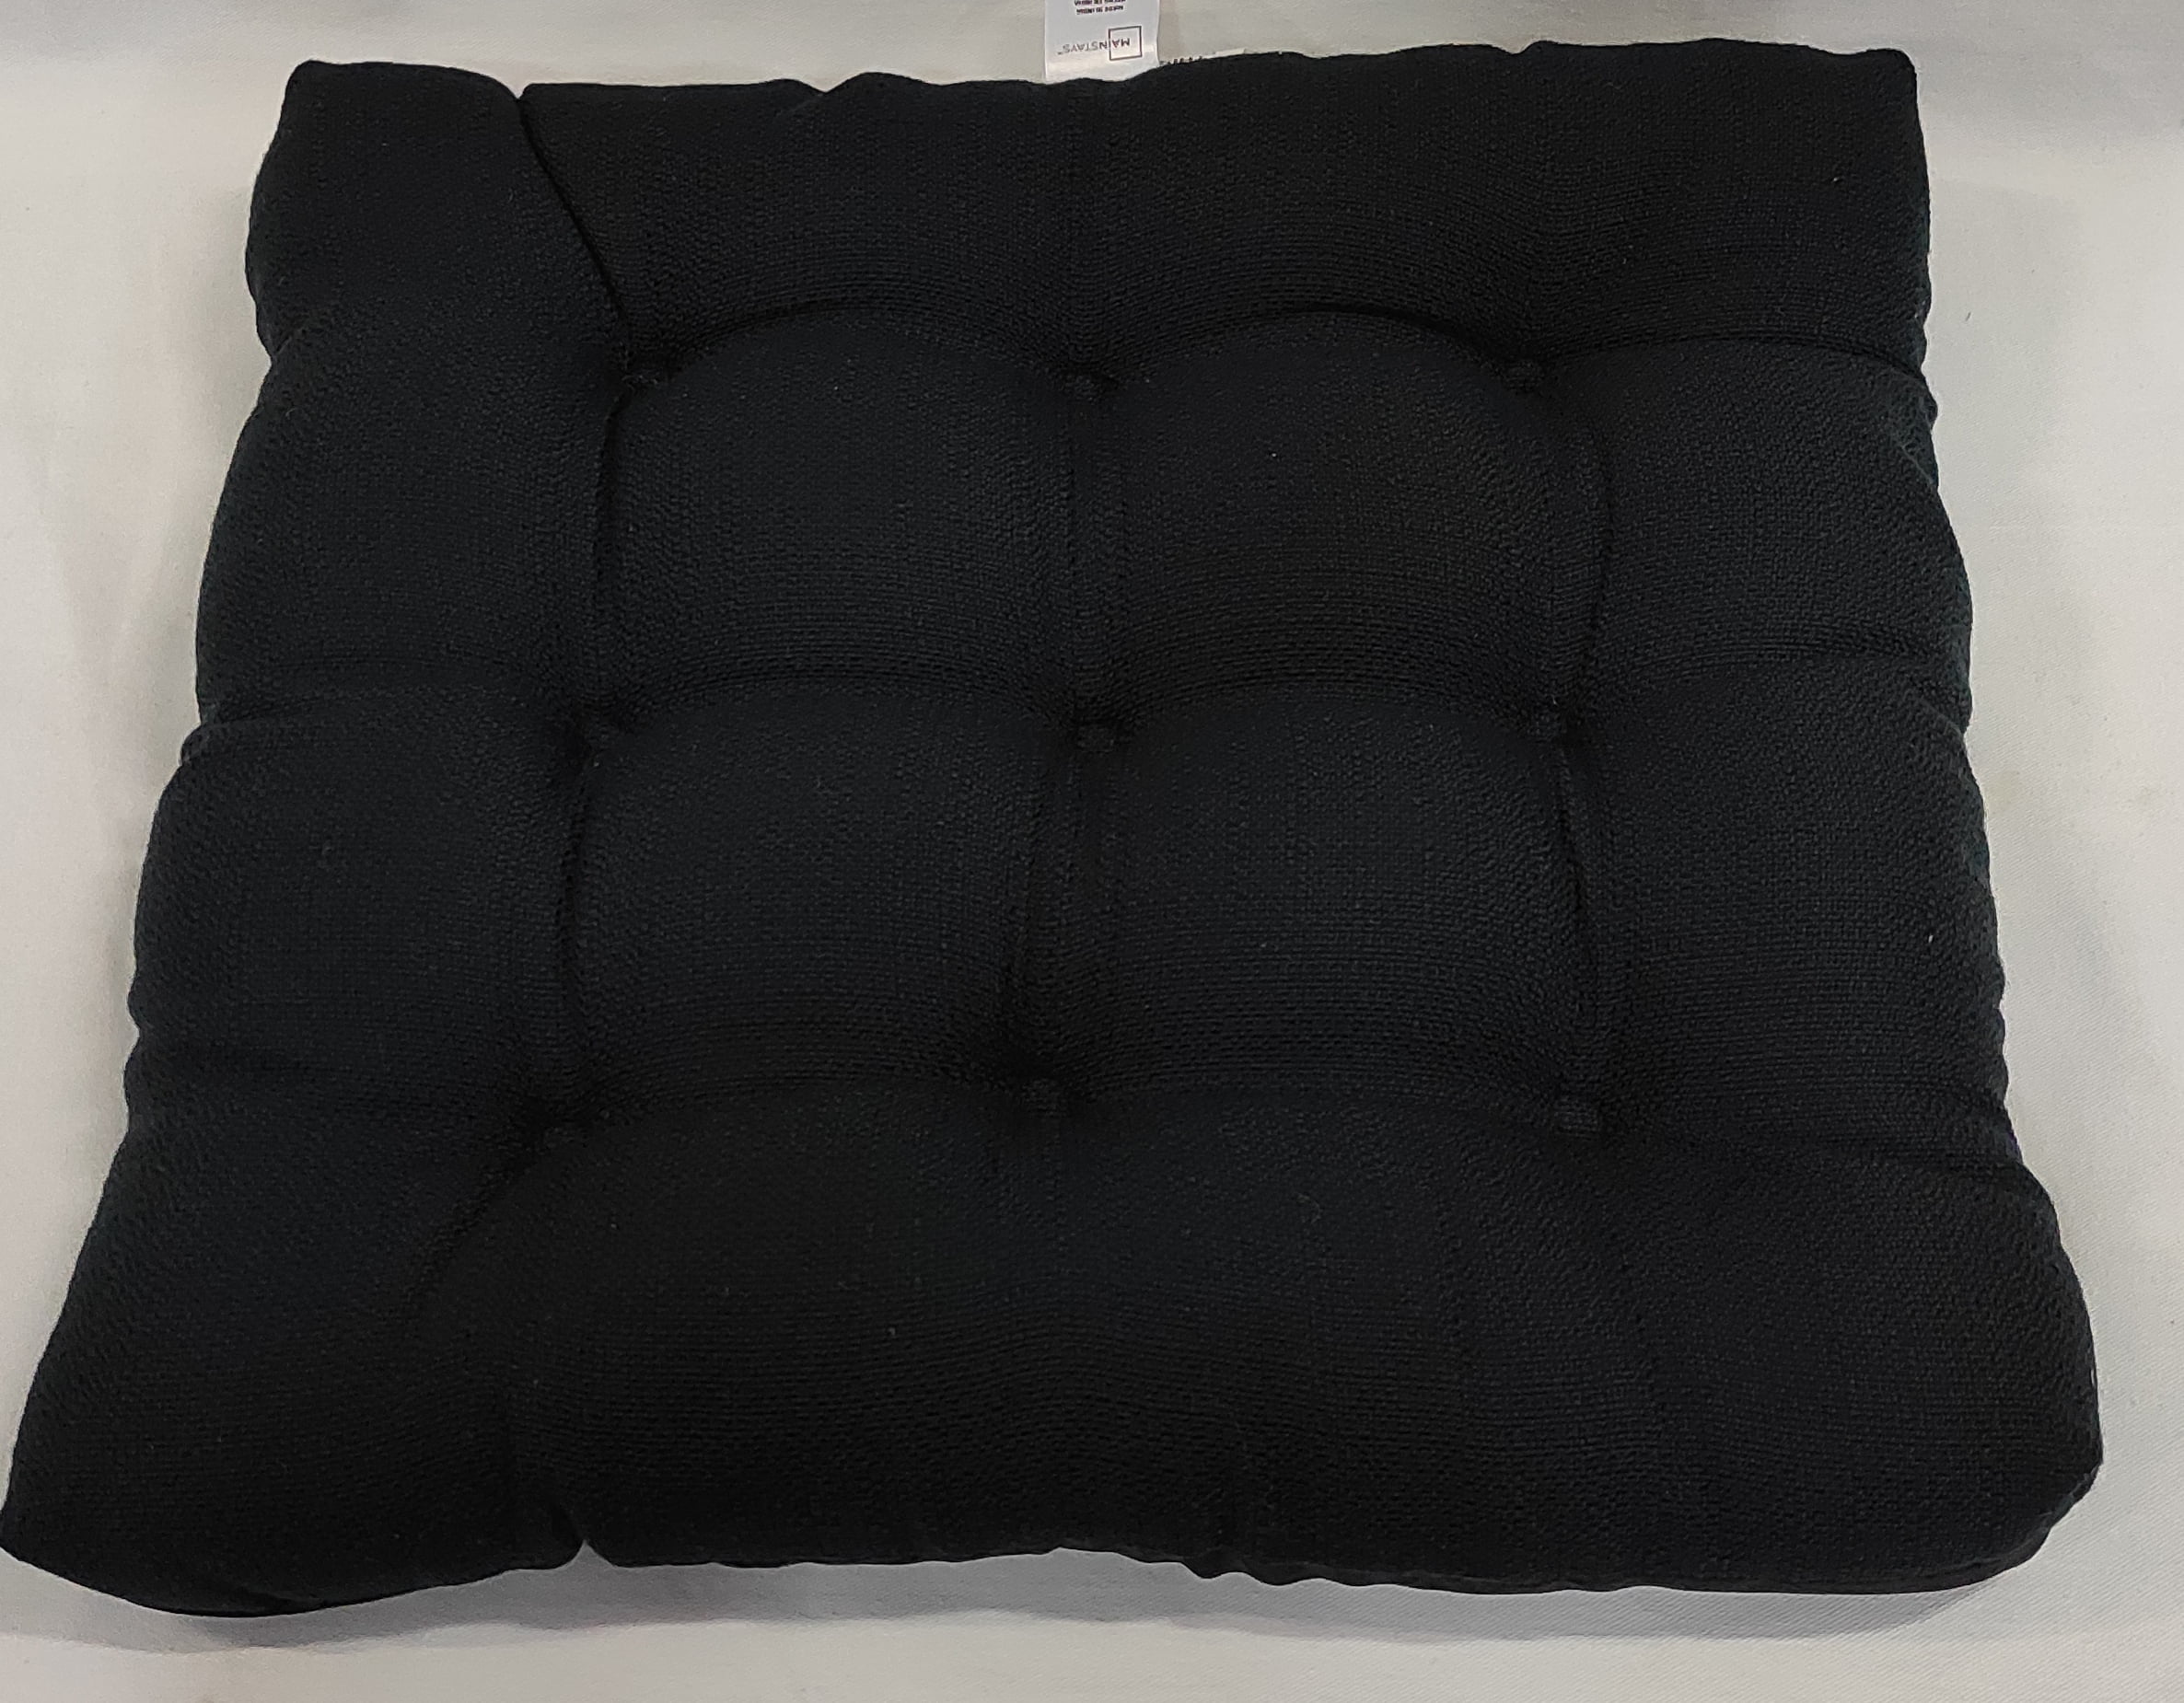 Mainstays Textured Chair Cushion, Rich Black, 1-Piece